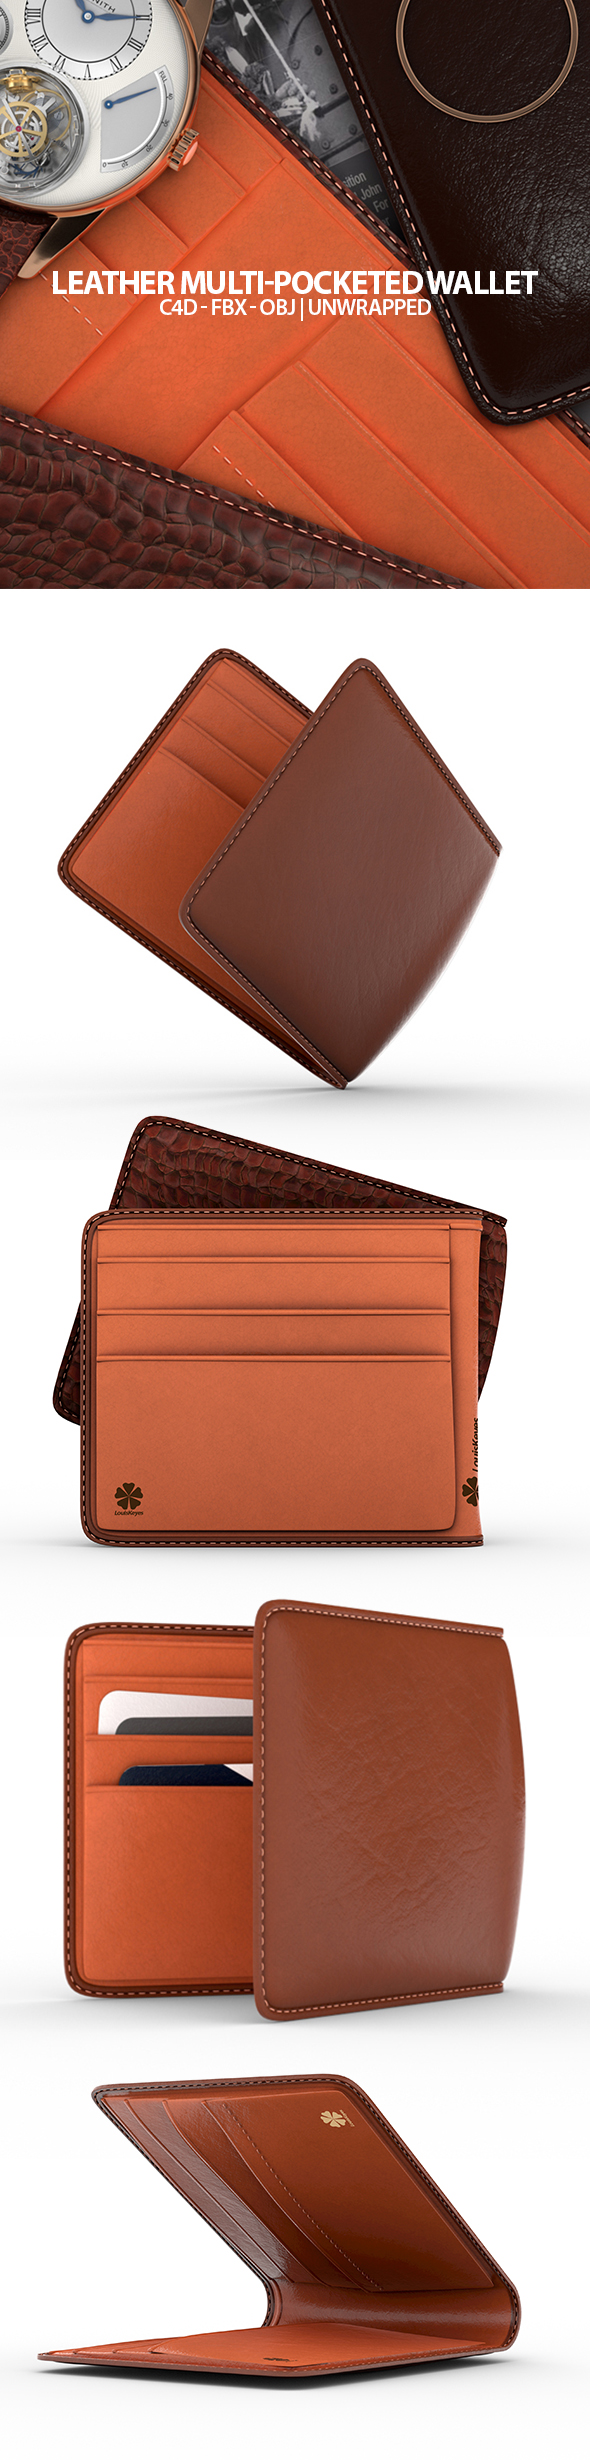 Leather Wallet 3D - 3Docean 25385438